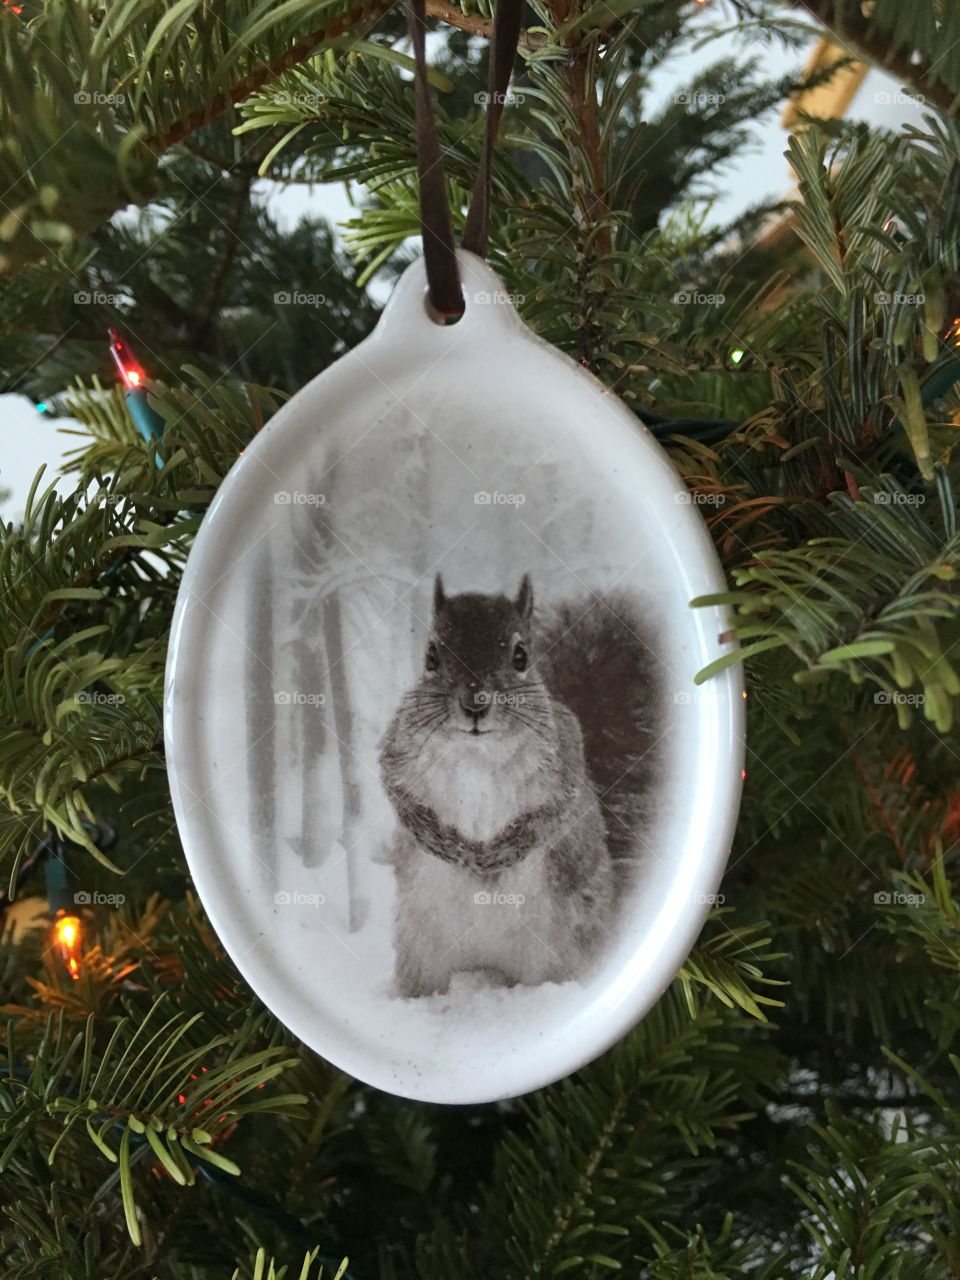 New ornament.